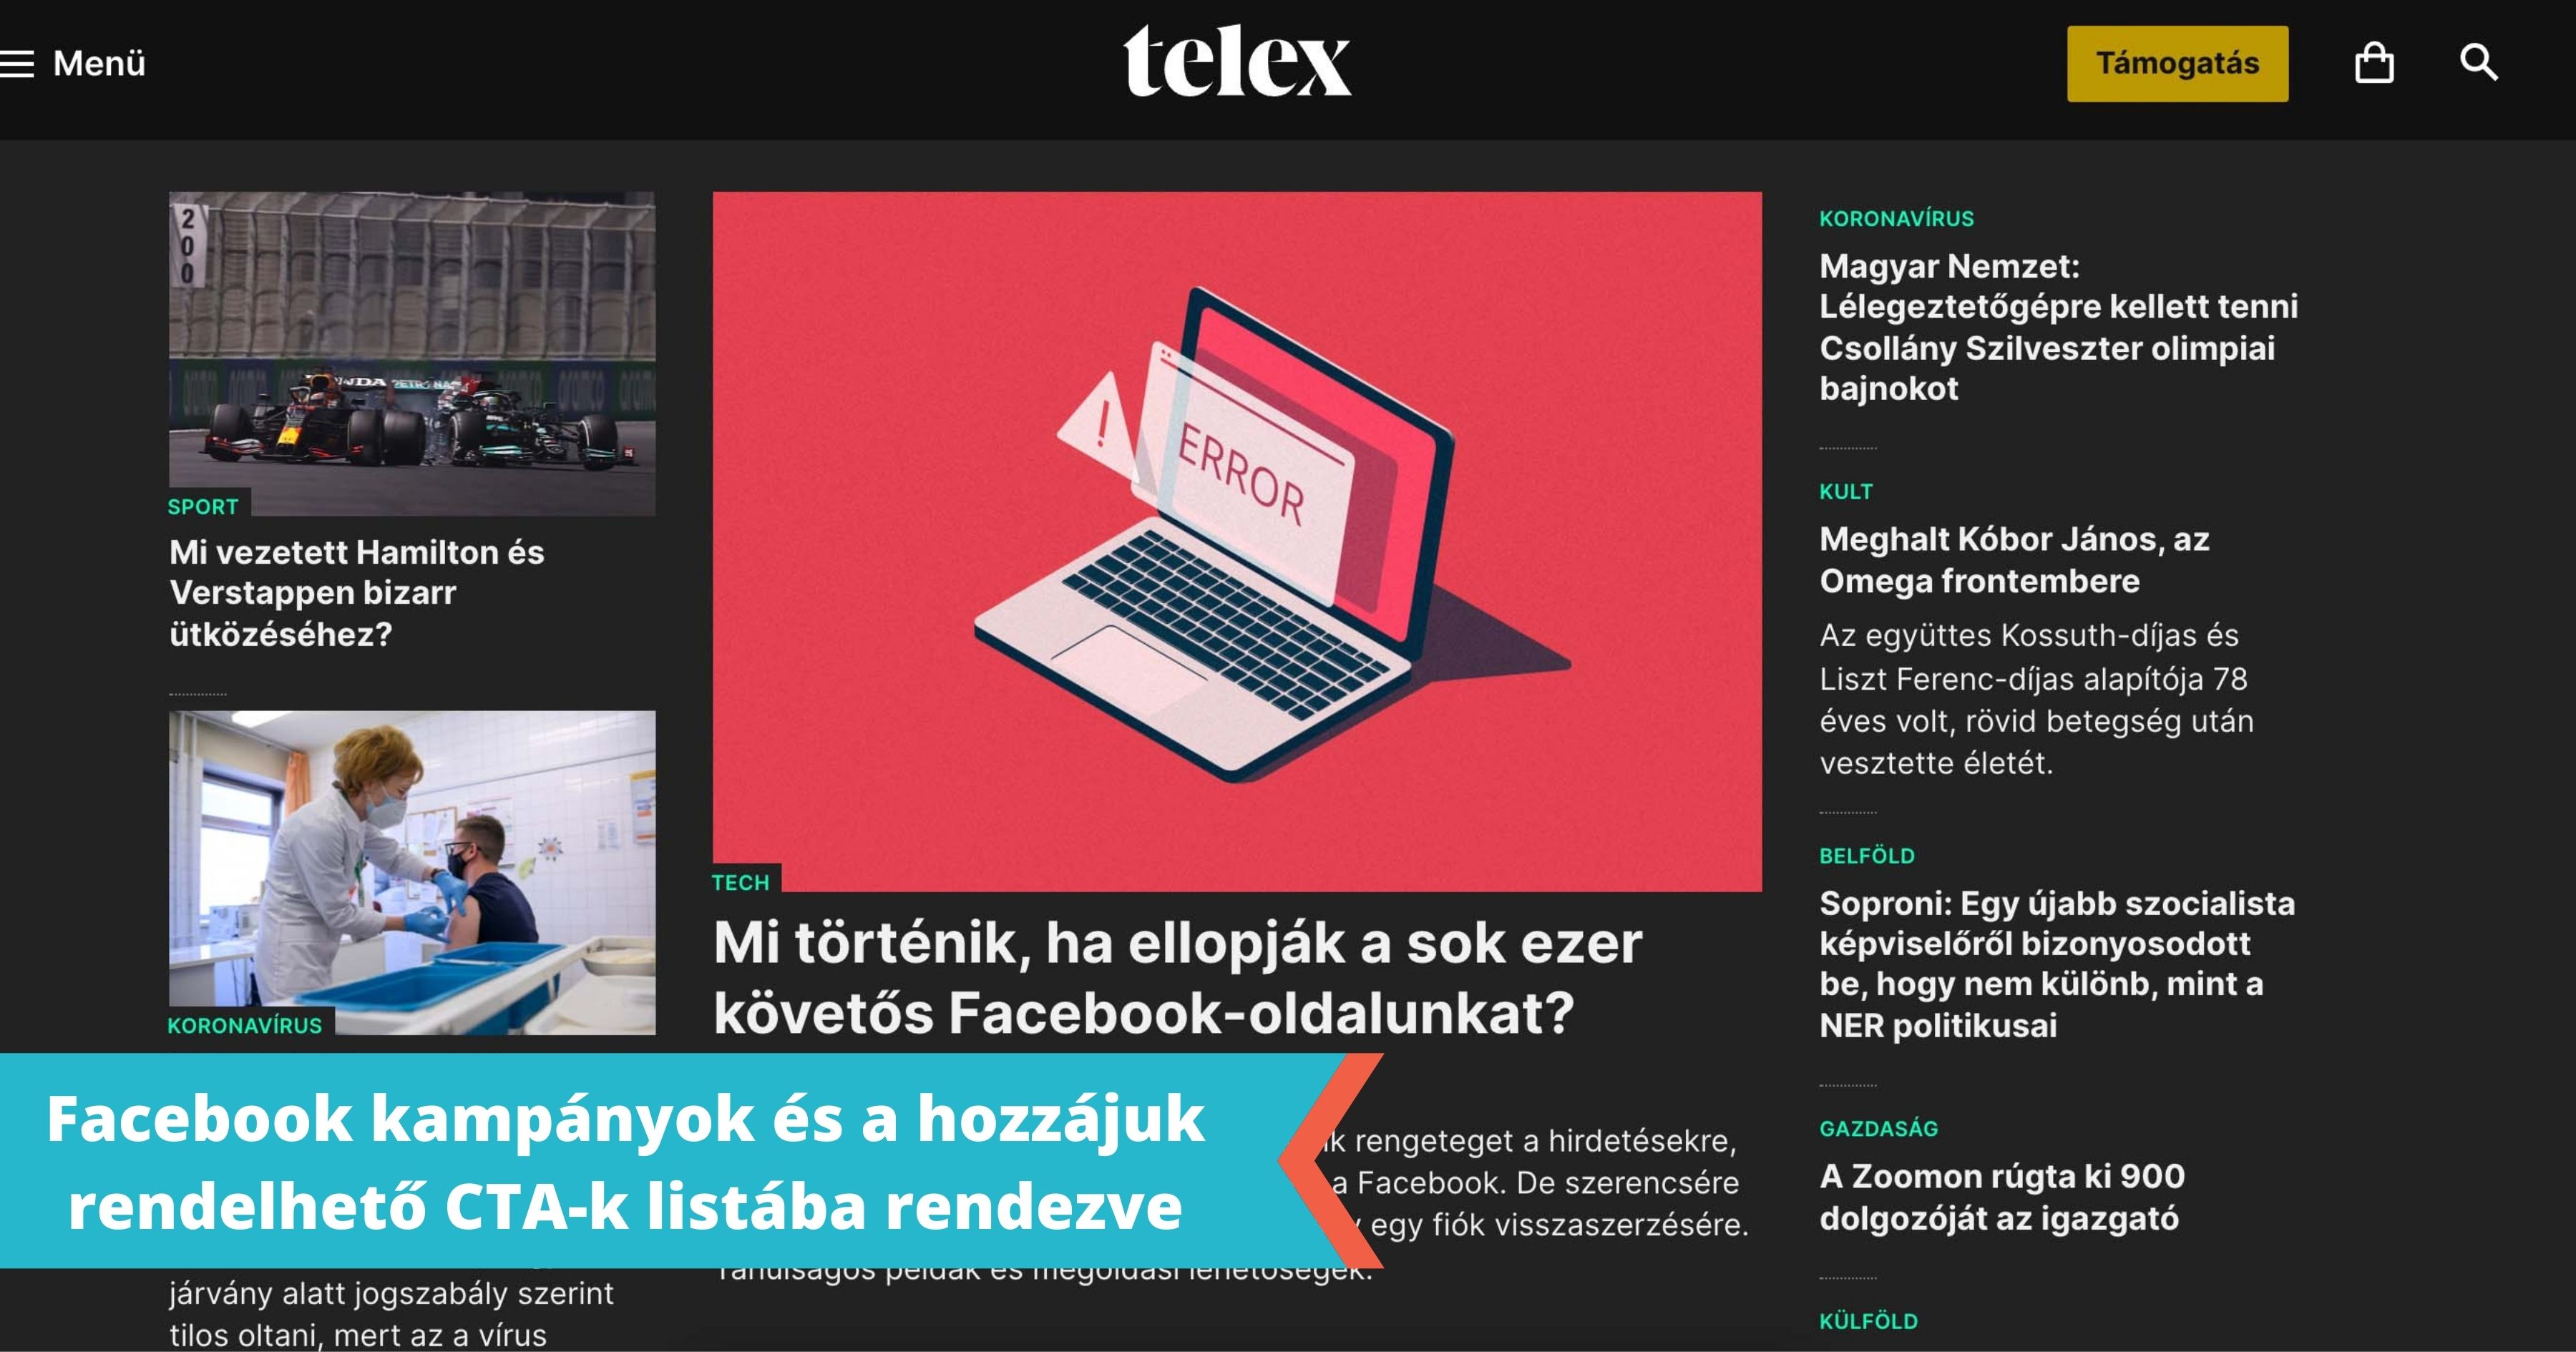 telex.hu SocialWings interjú - 2021-12-09T09:37:00Z